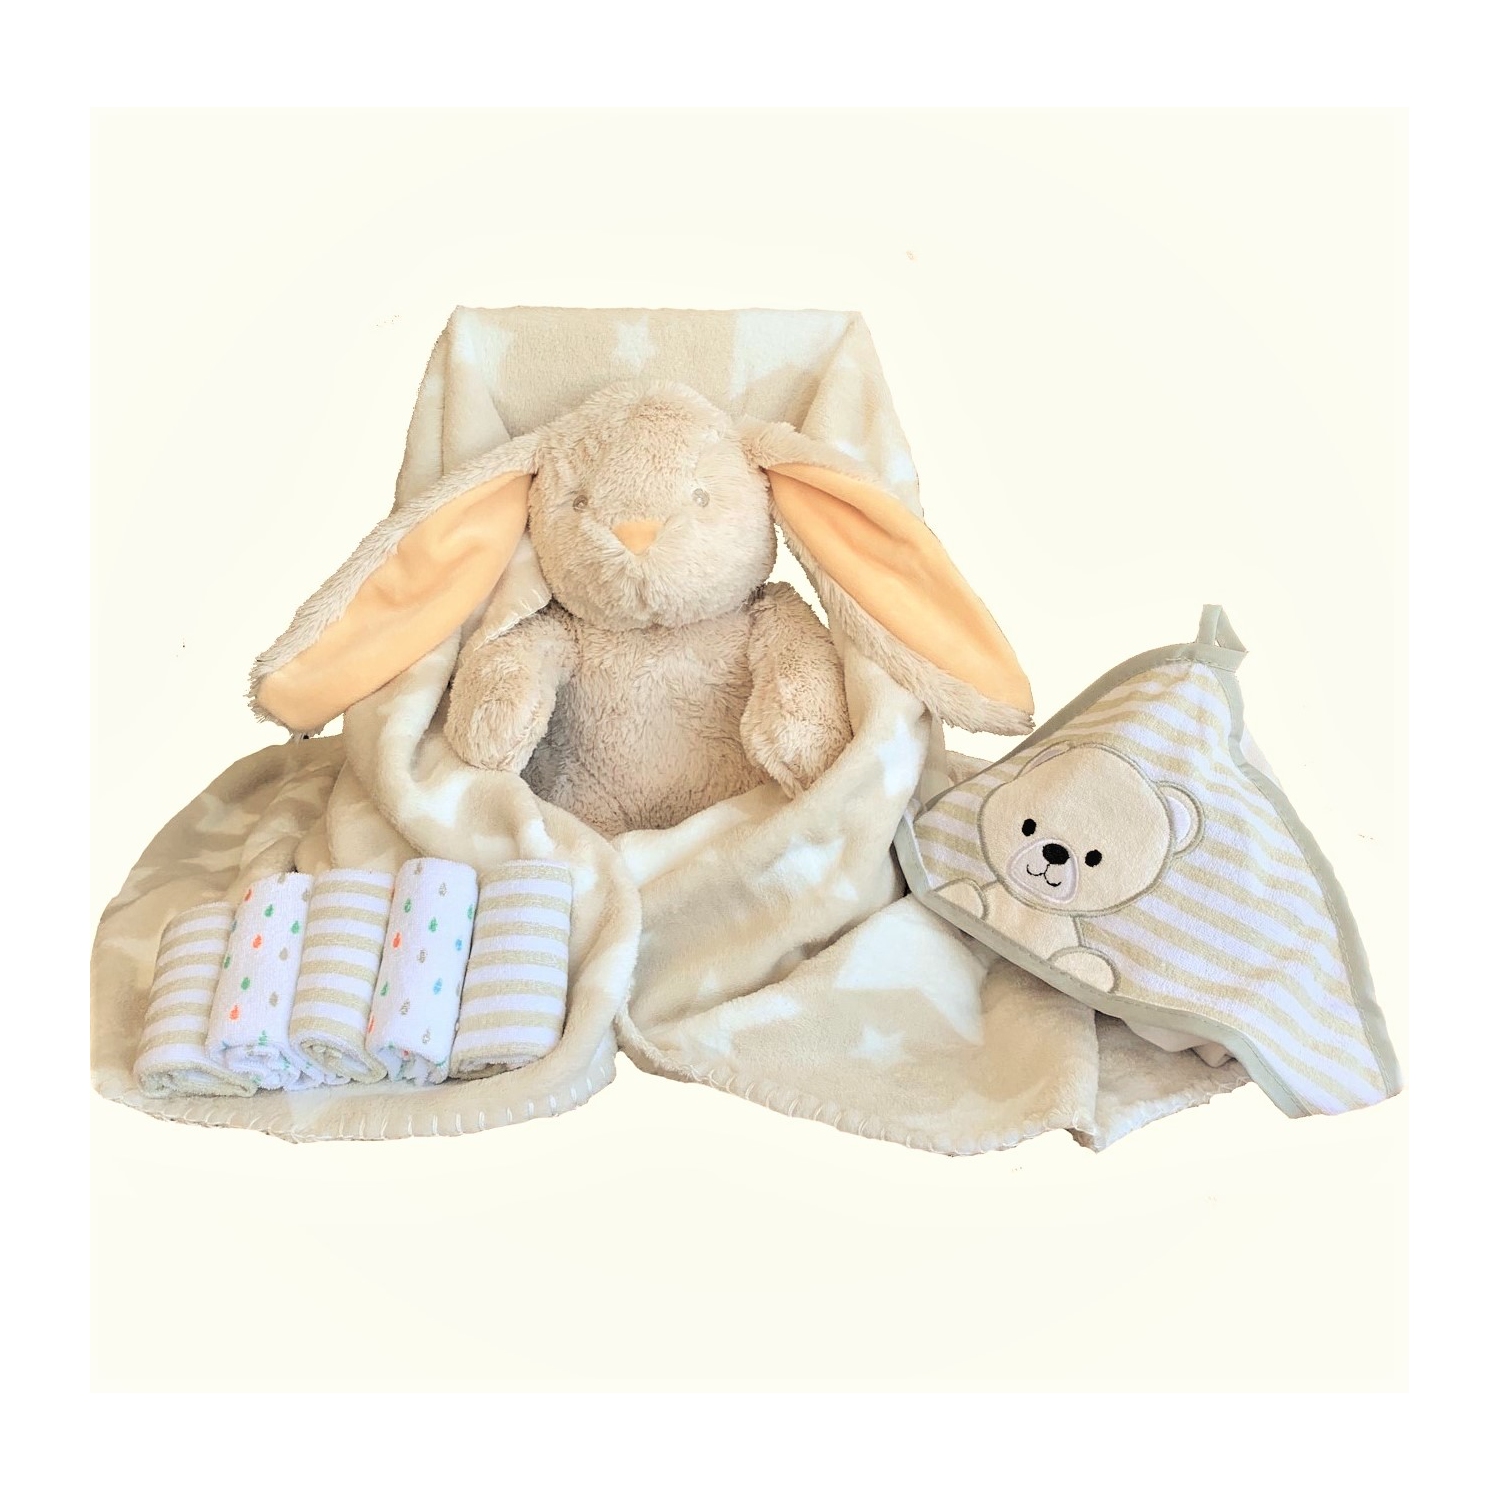 Tootsie Baby Luxurious Newborn Baby Set - Grey 8 Pieces Gift Set with Bunny Plush Toy